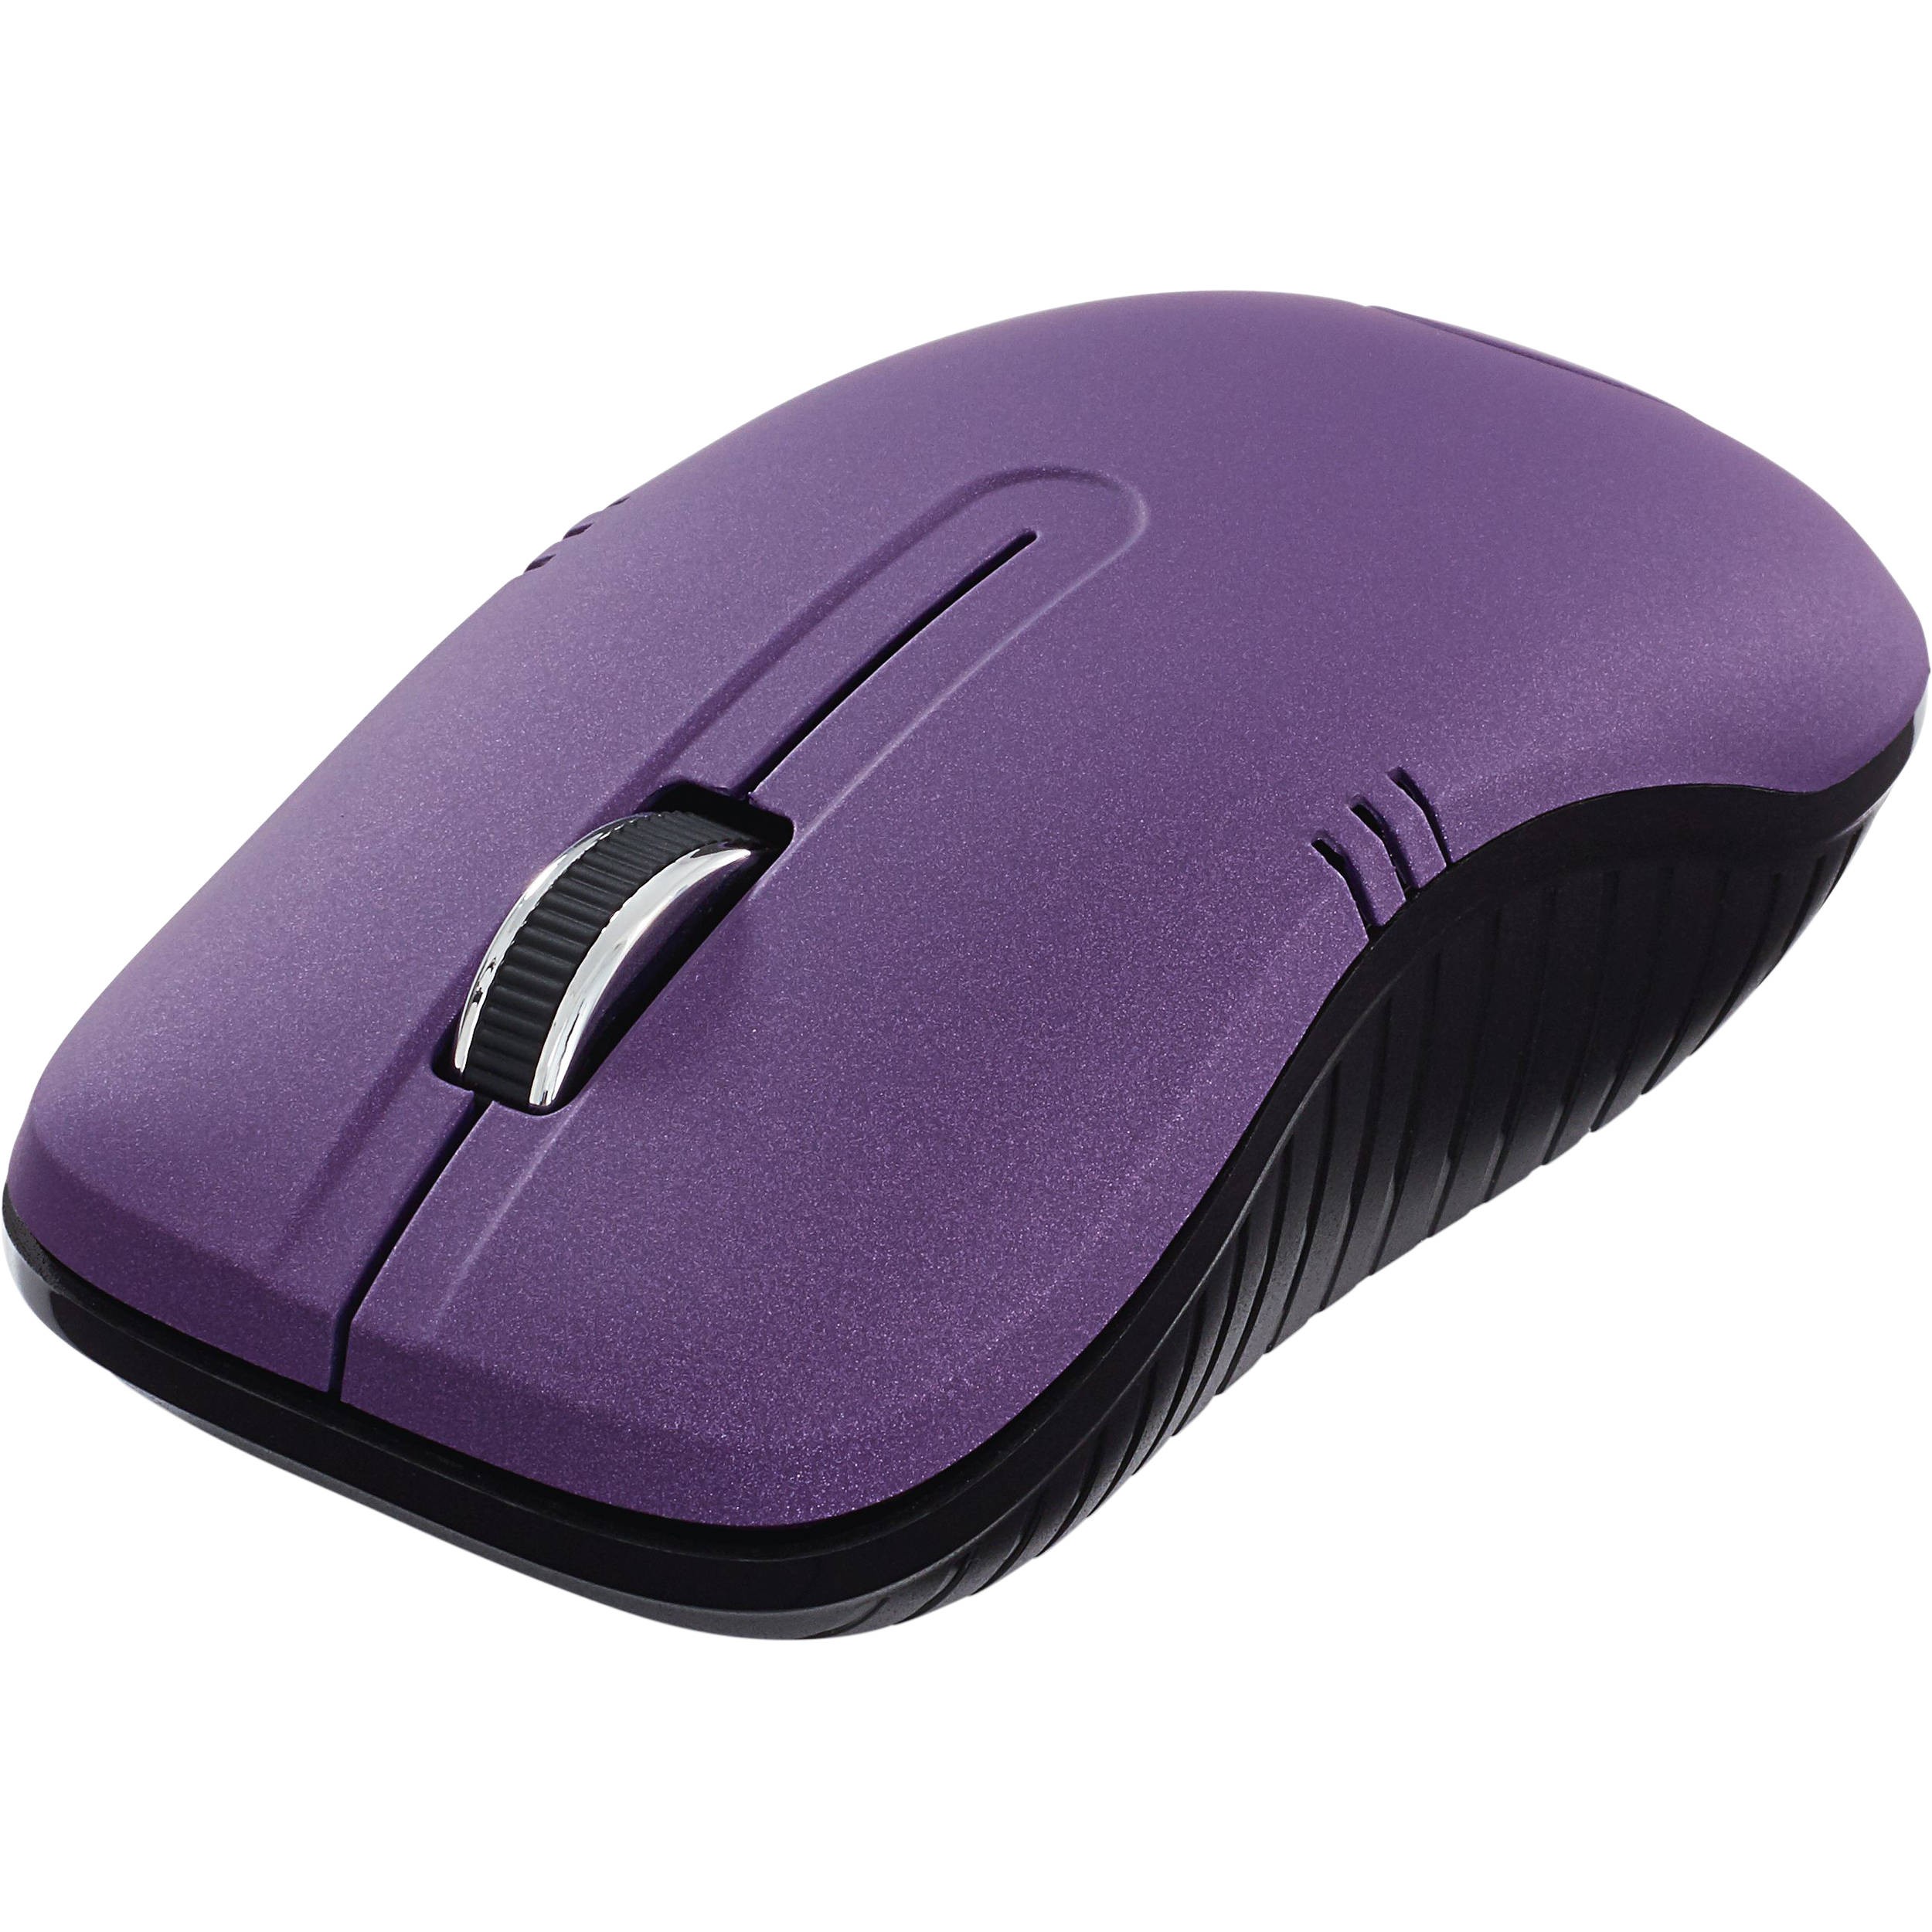 Verbatim Wireless Mouse